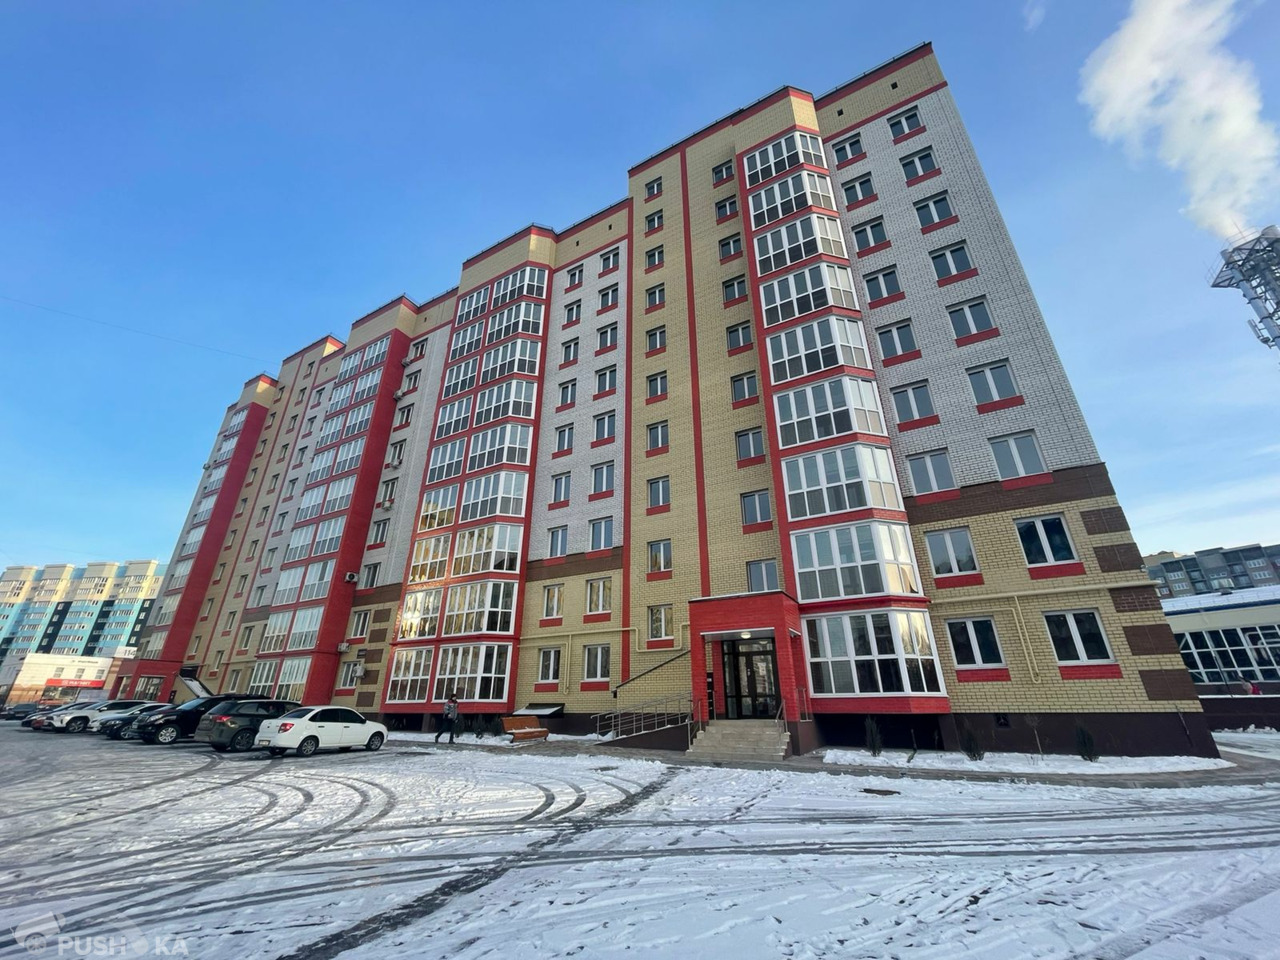 Продаётся 3-комнатная квартира 84.0 кв.м. этаж 5/9 за 7 900 000 руб 